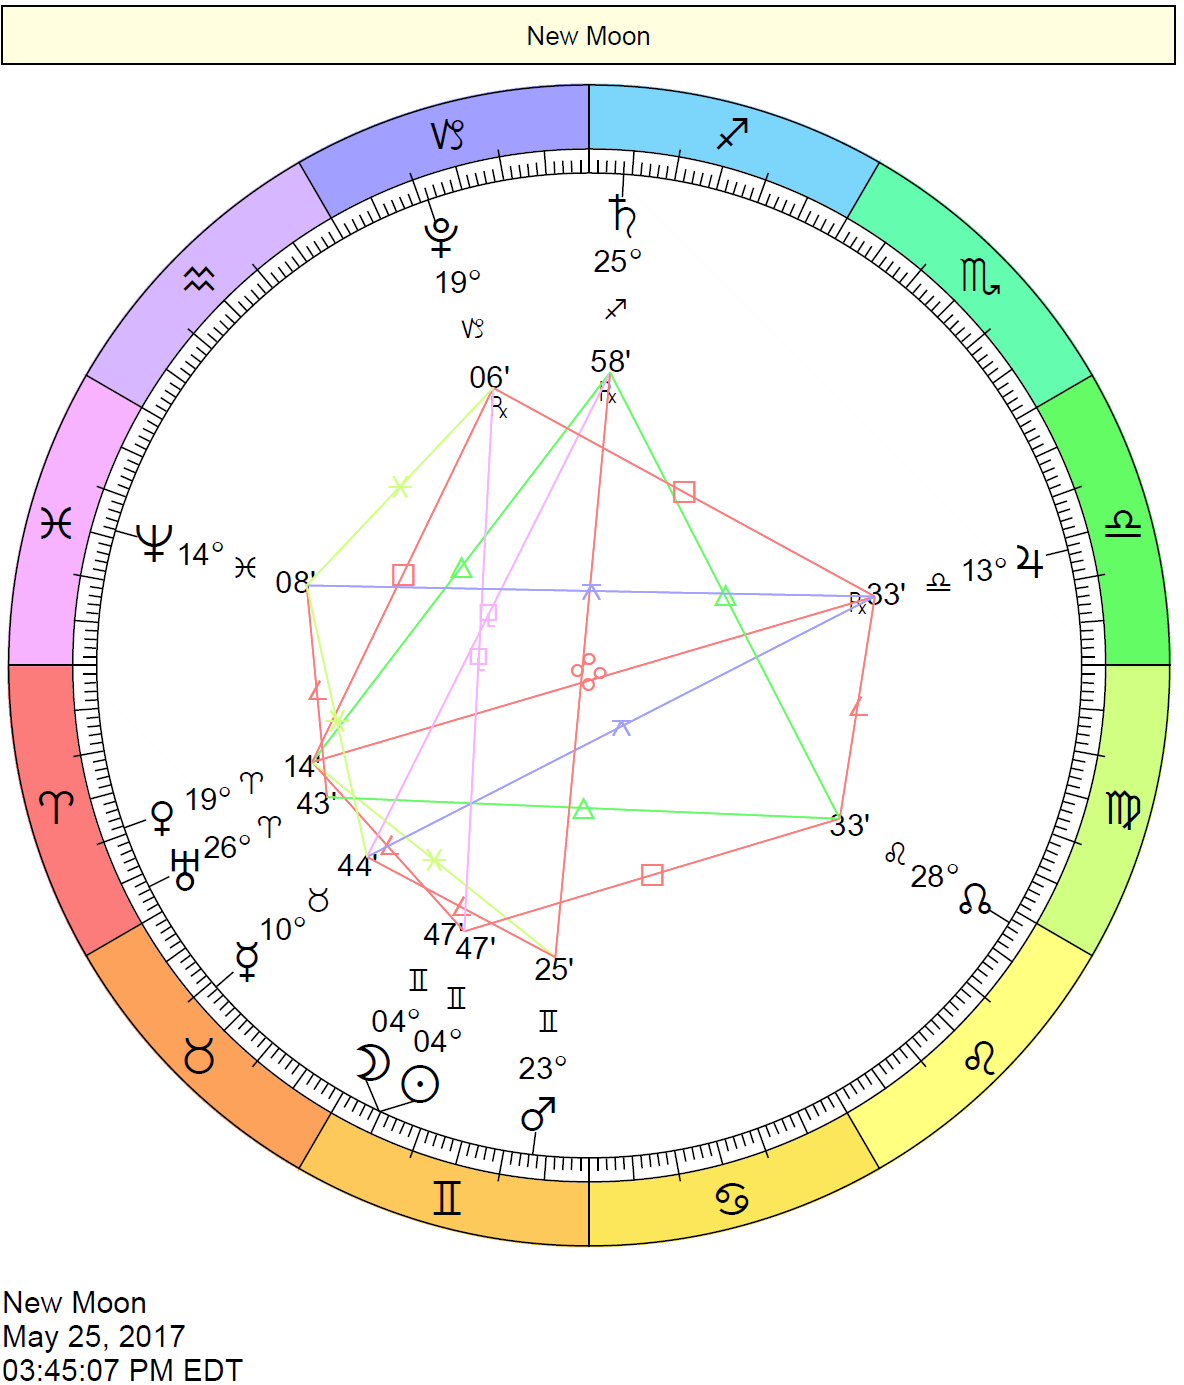 New Moon in Gemini chart on May 25, 2017